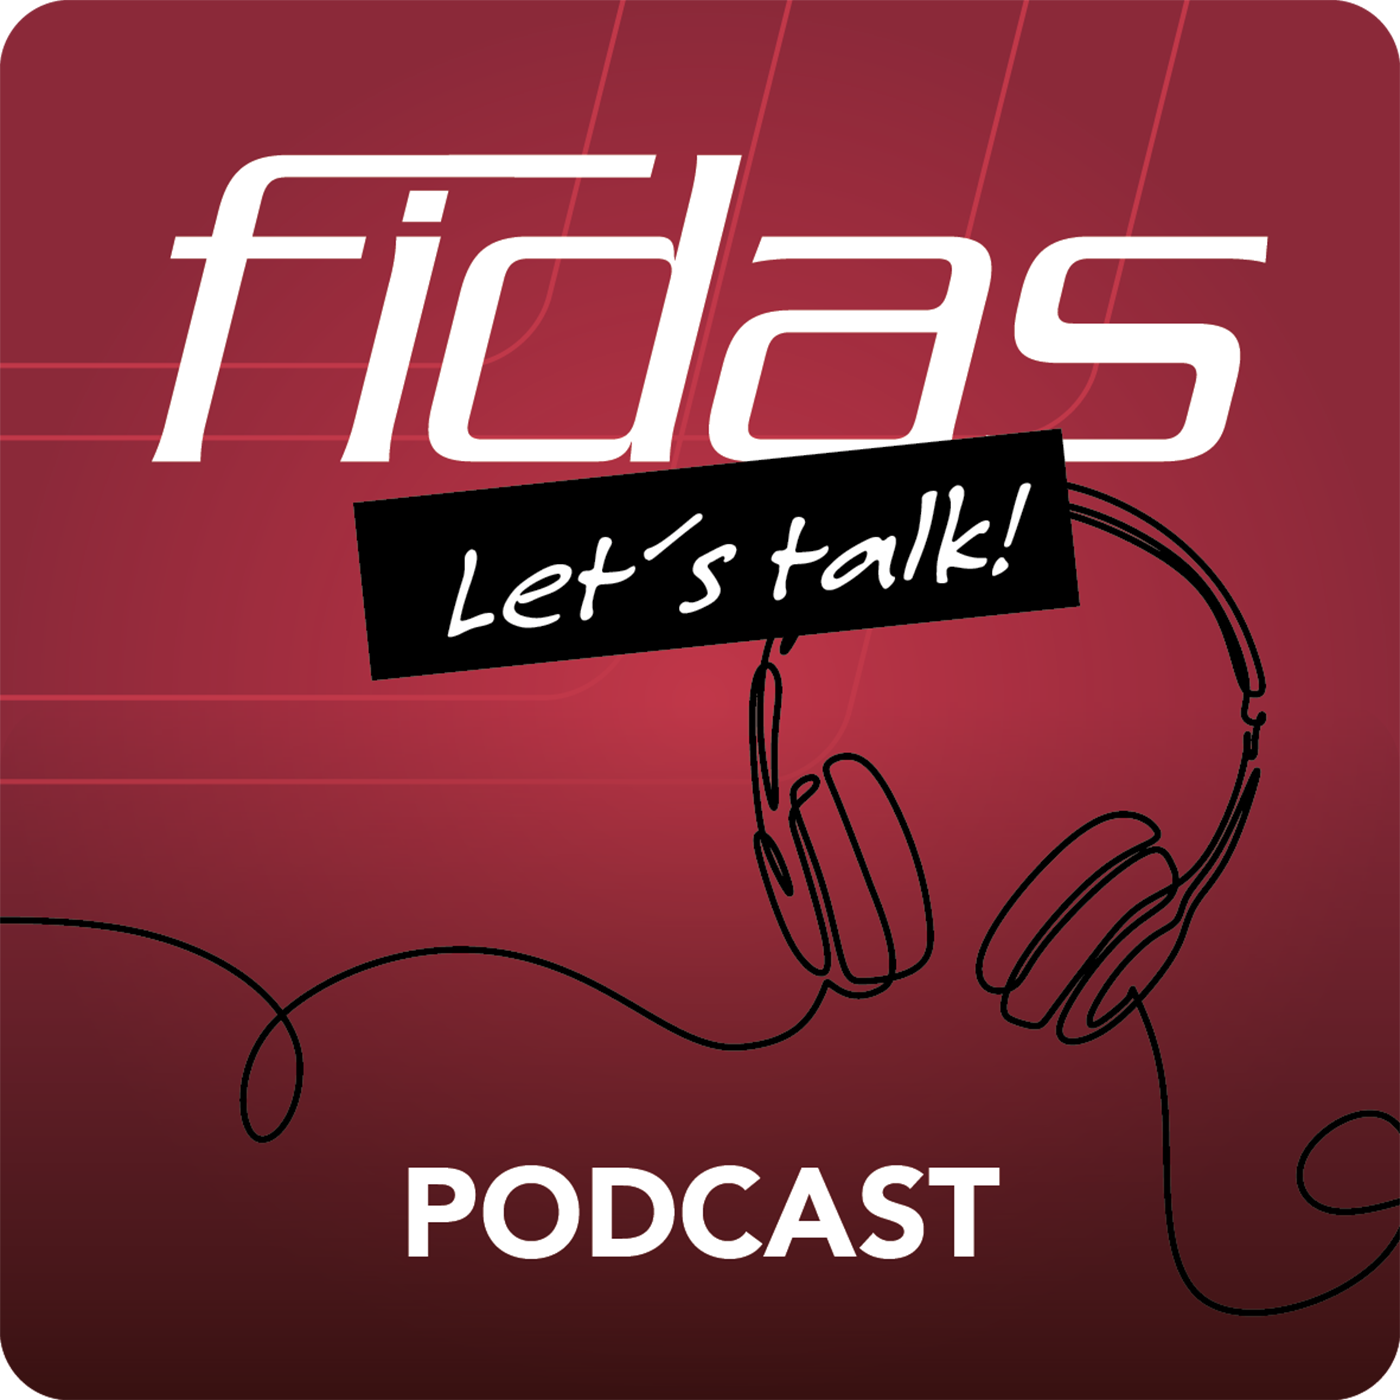 Fidas Lets talk